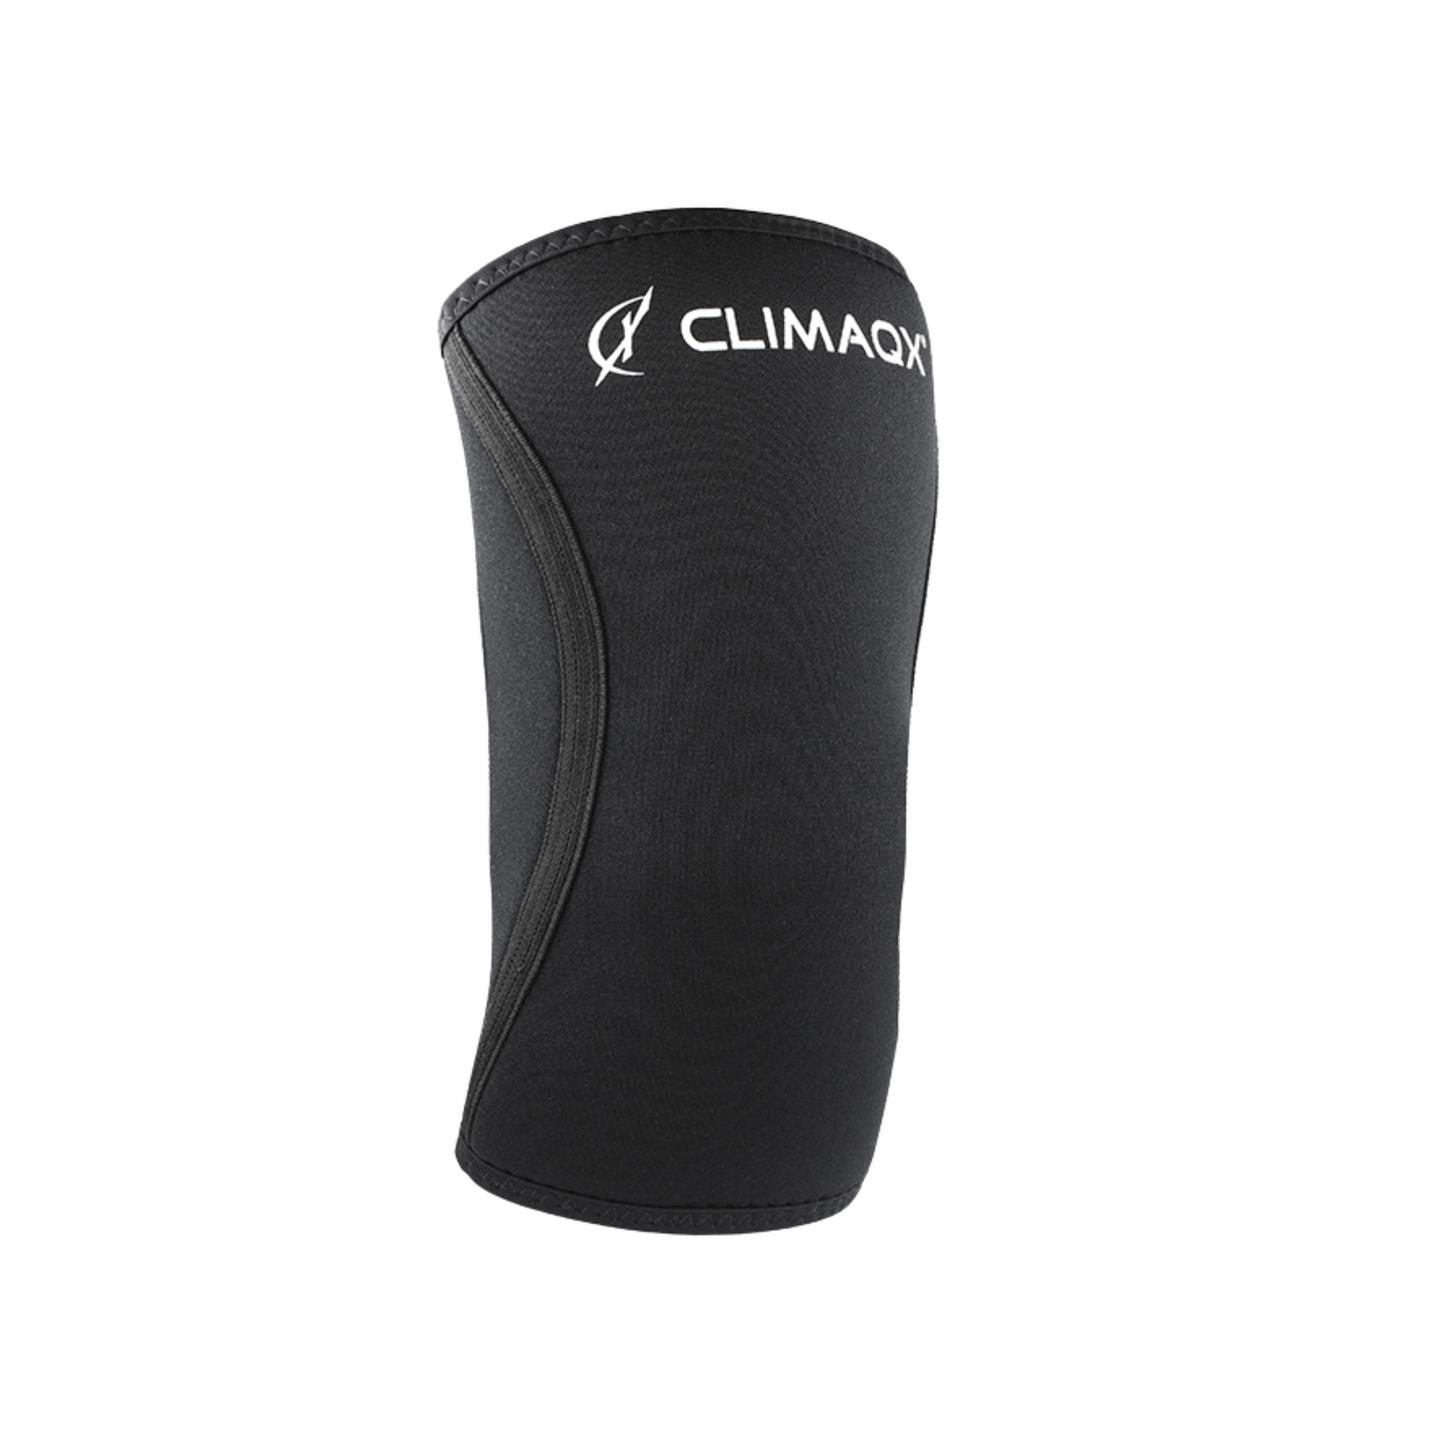 CLIMAQX Knee-Sleeves